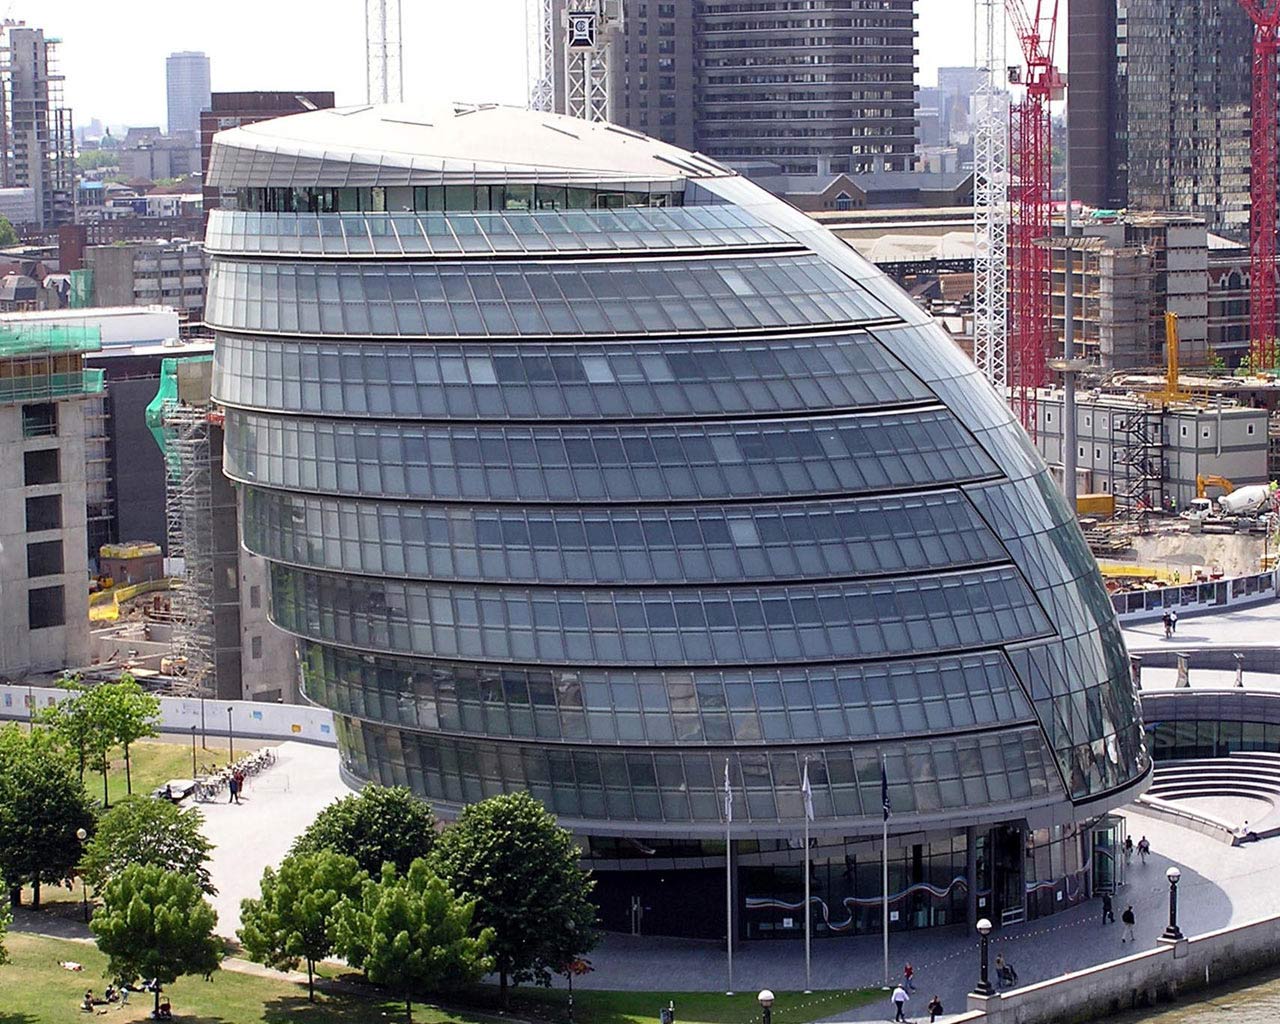 London City Hall - description of the building